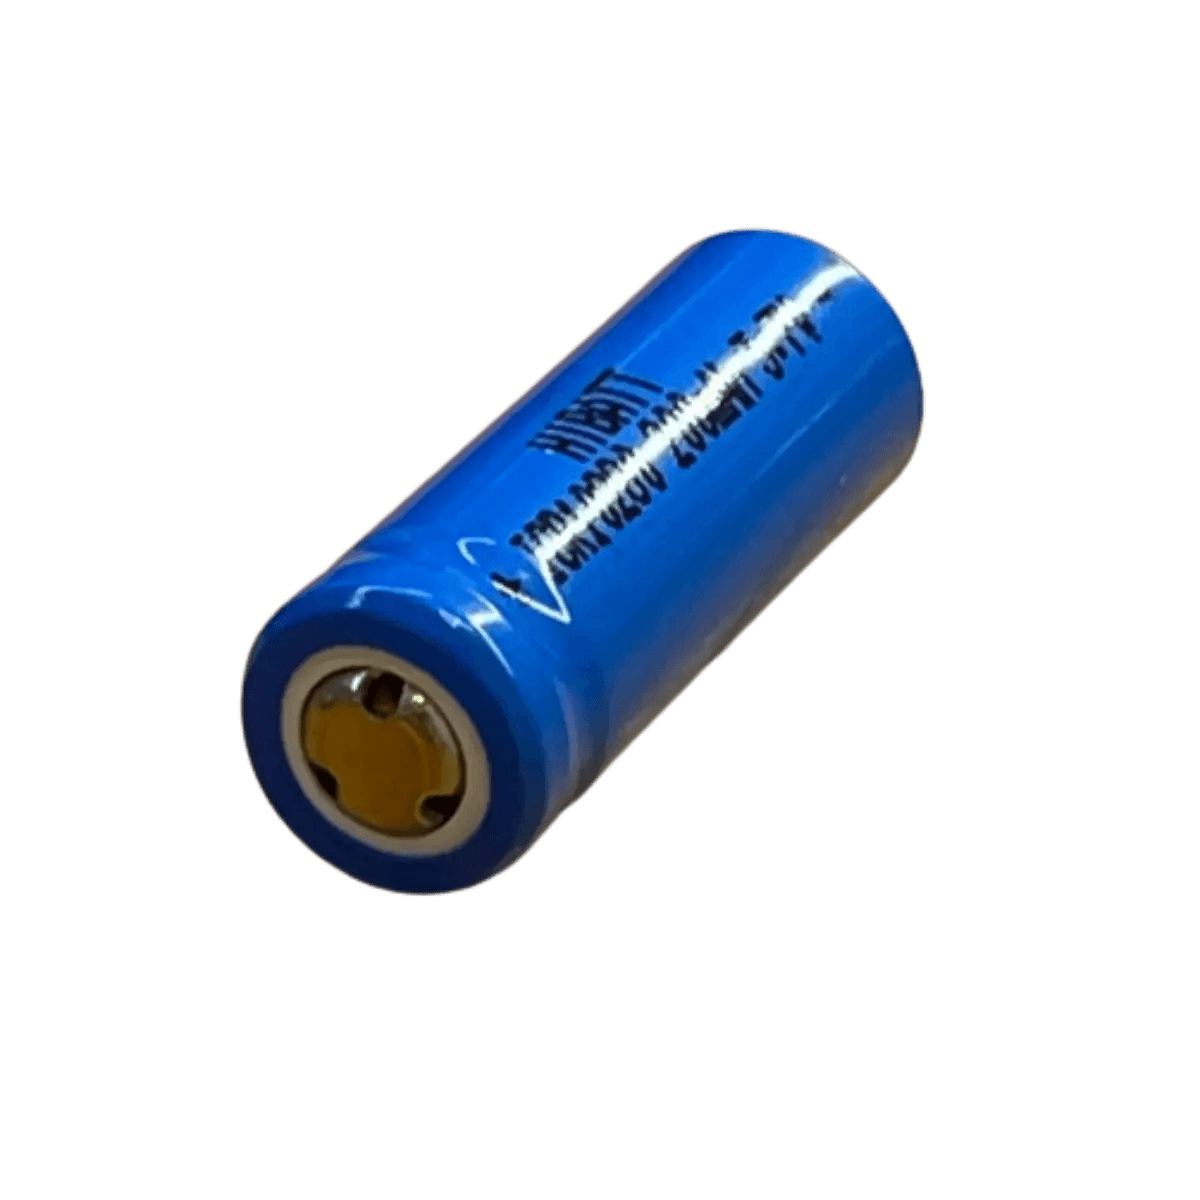 Batterie Li-ion 10280 3.7V 200mAh